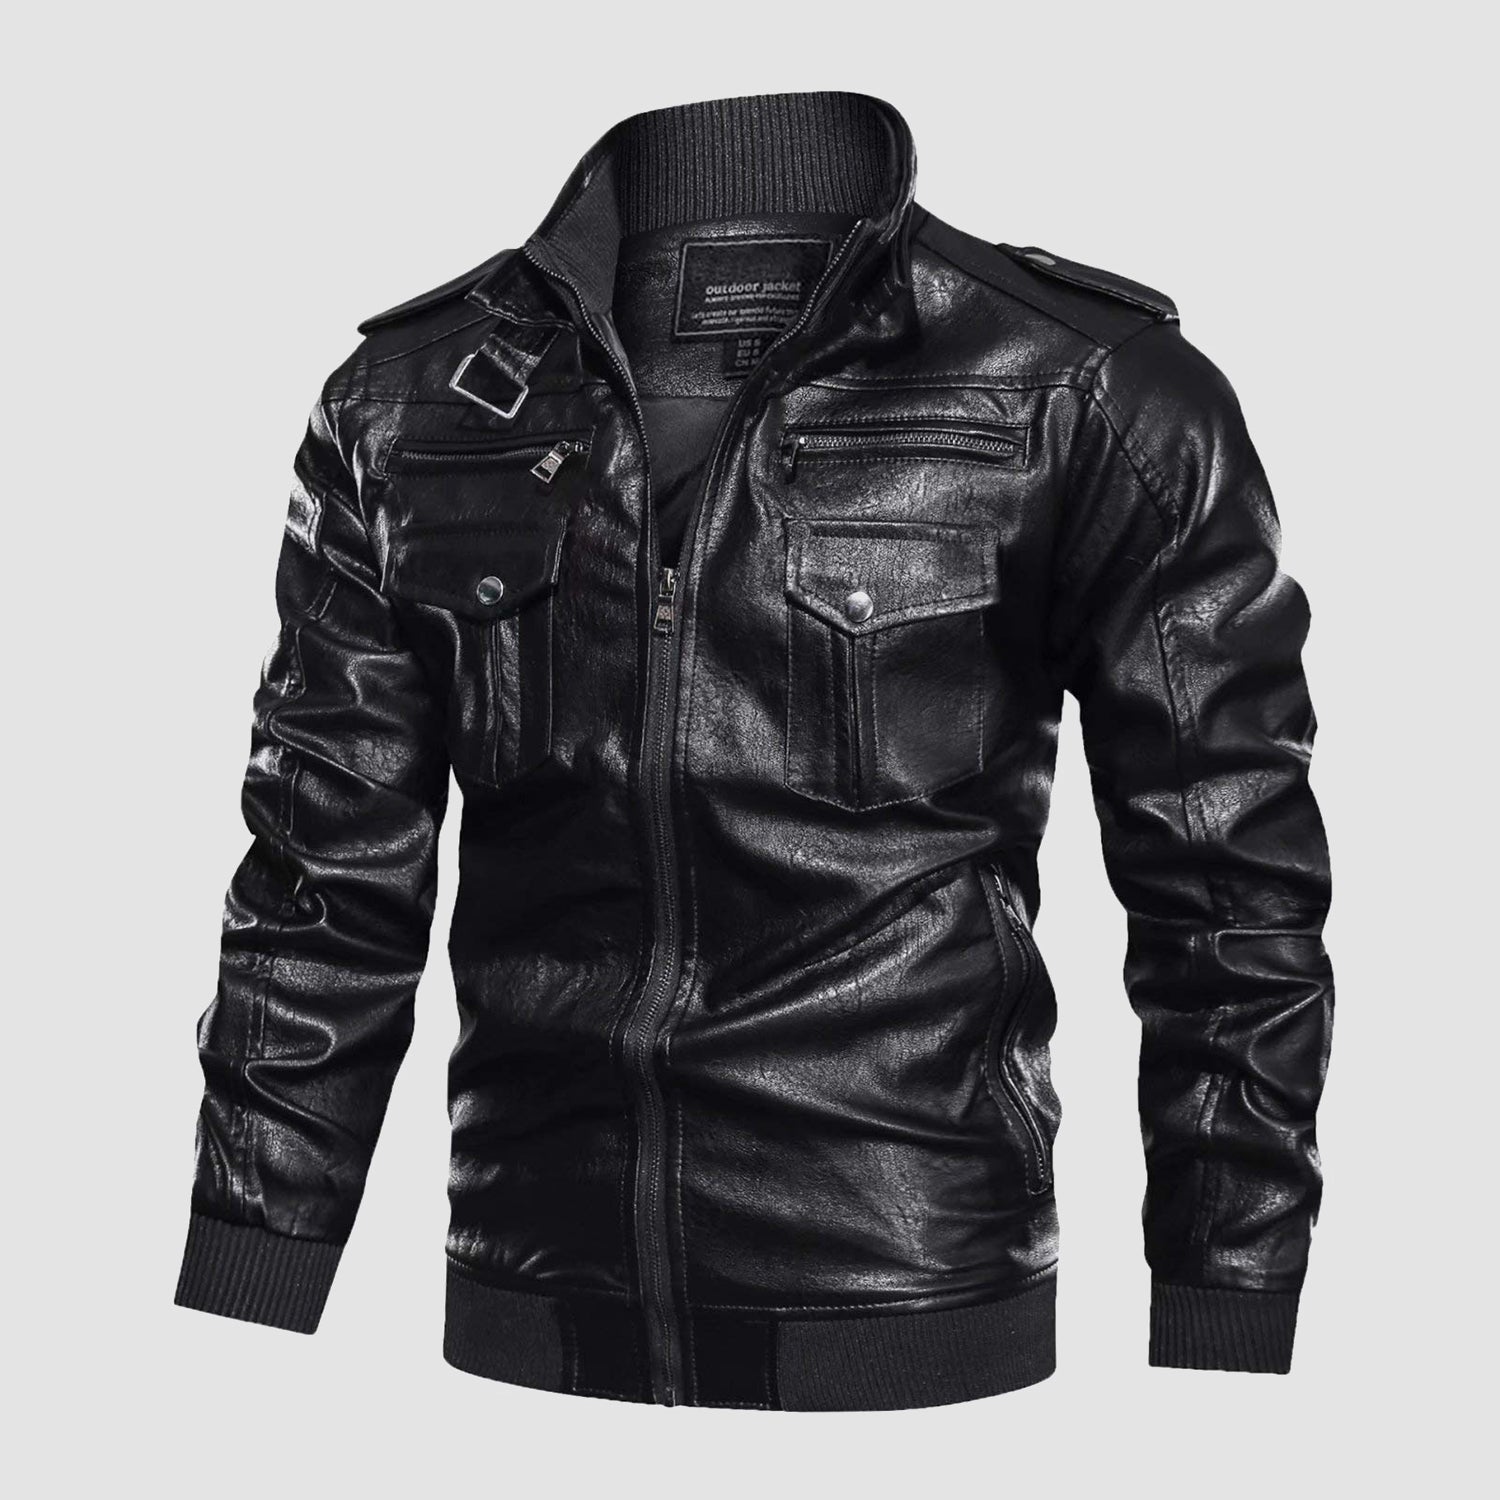 Ansel Elgort Black Bomber Leather Jacket - USA Leather Factory